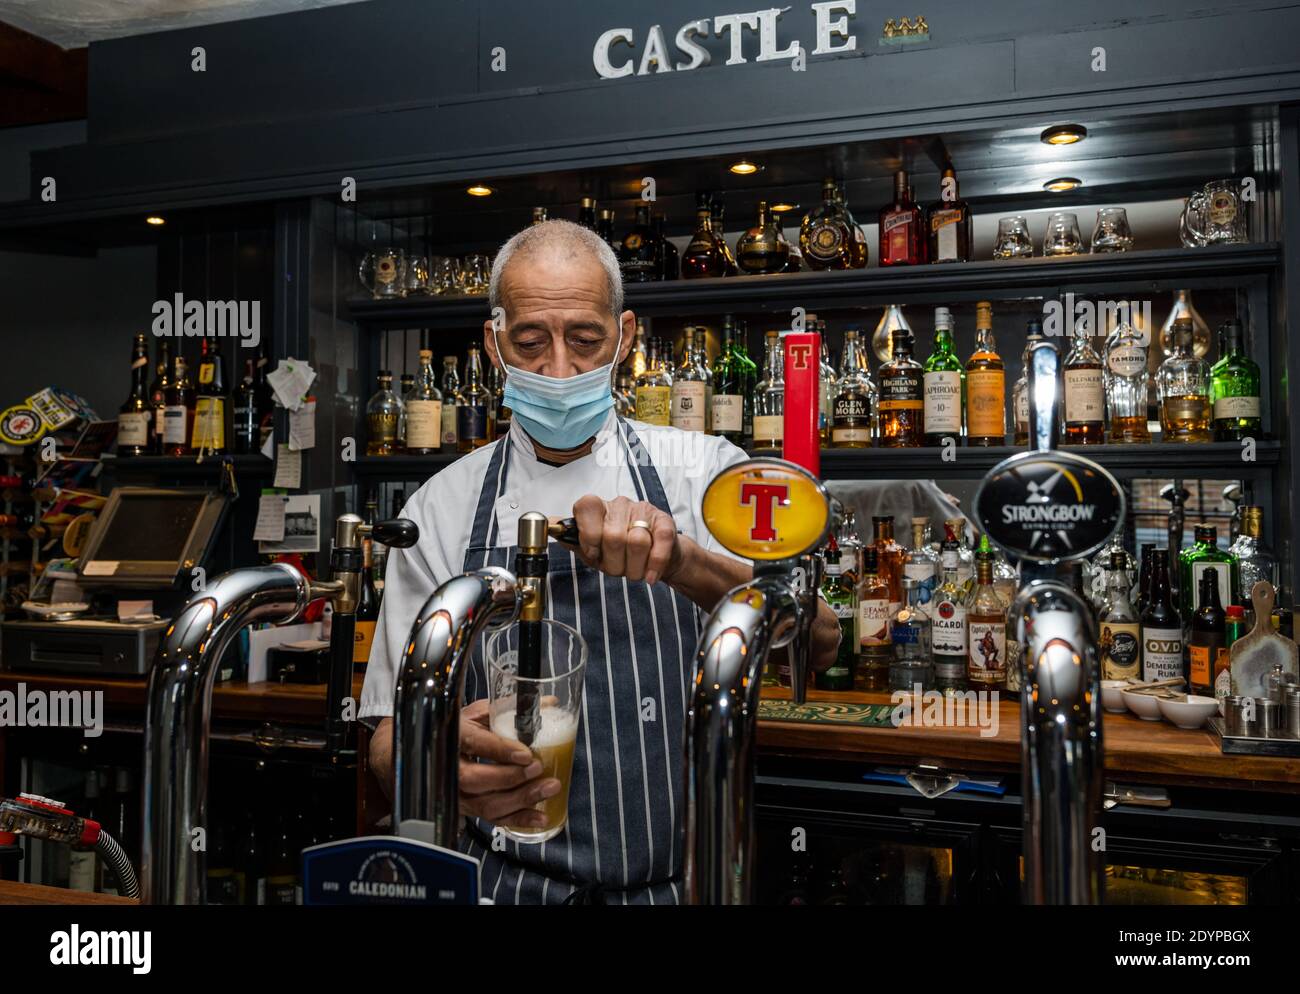 Barman usando delantal y máscara durante la pandemia Covid-19 verter pinta de cerveza de la bomba, Castle Inn, Dirleton, East Lothian, Escocia, Reino Unido Foto de stock